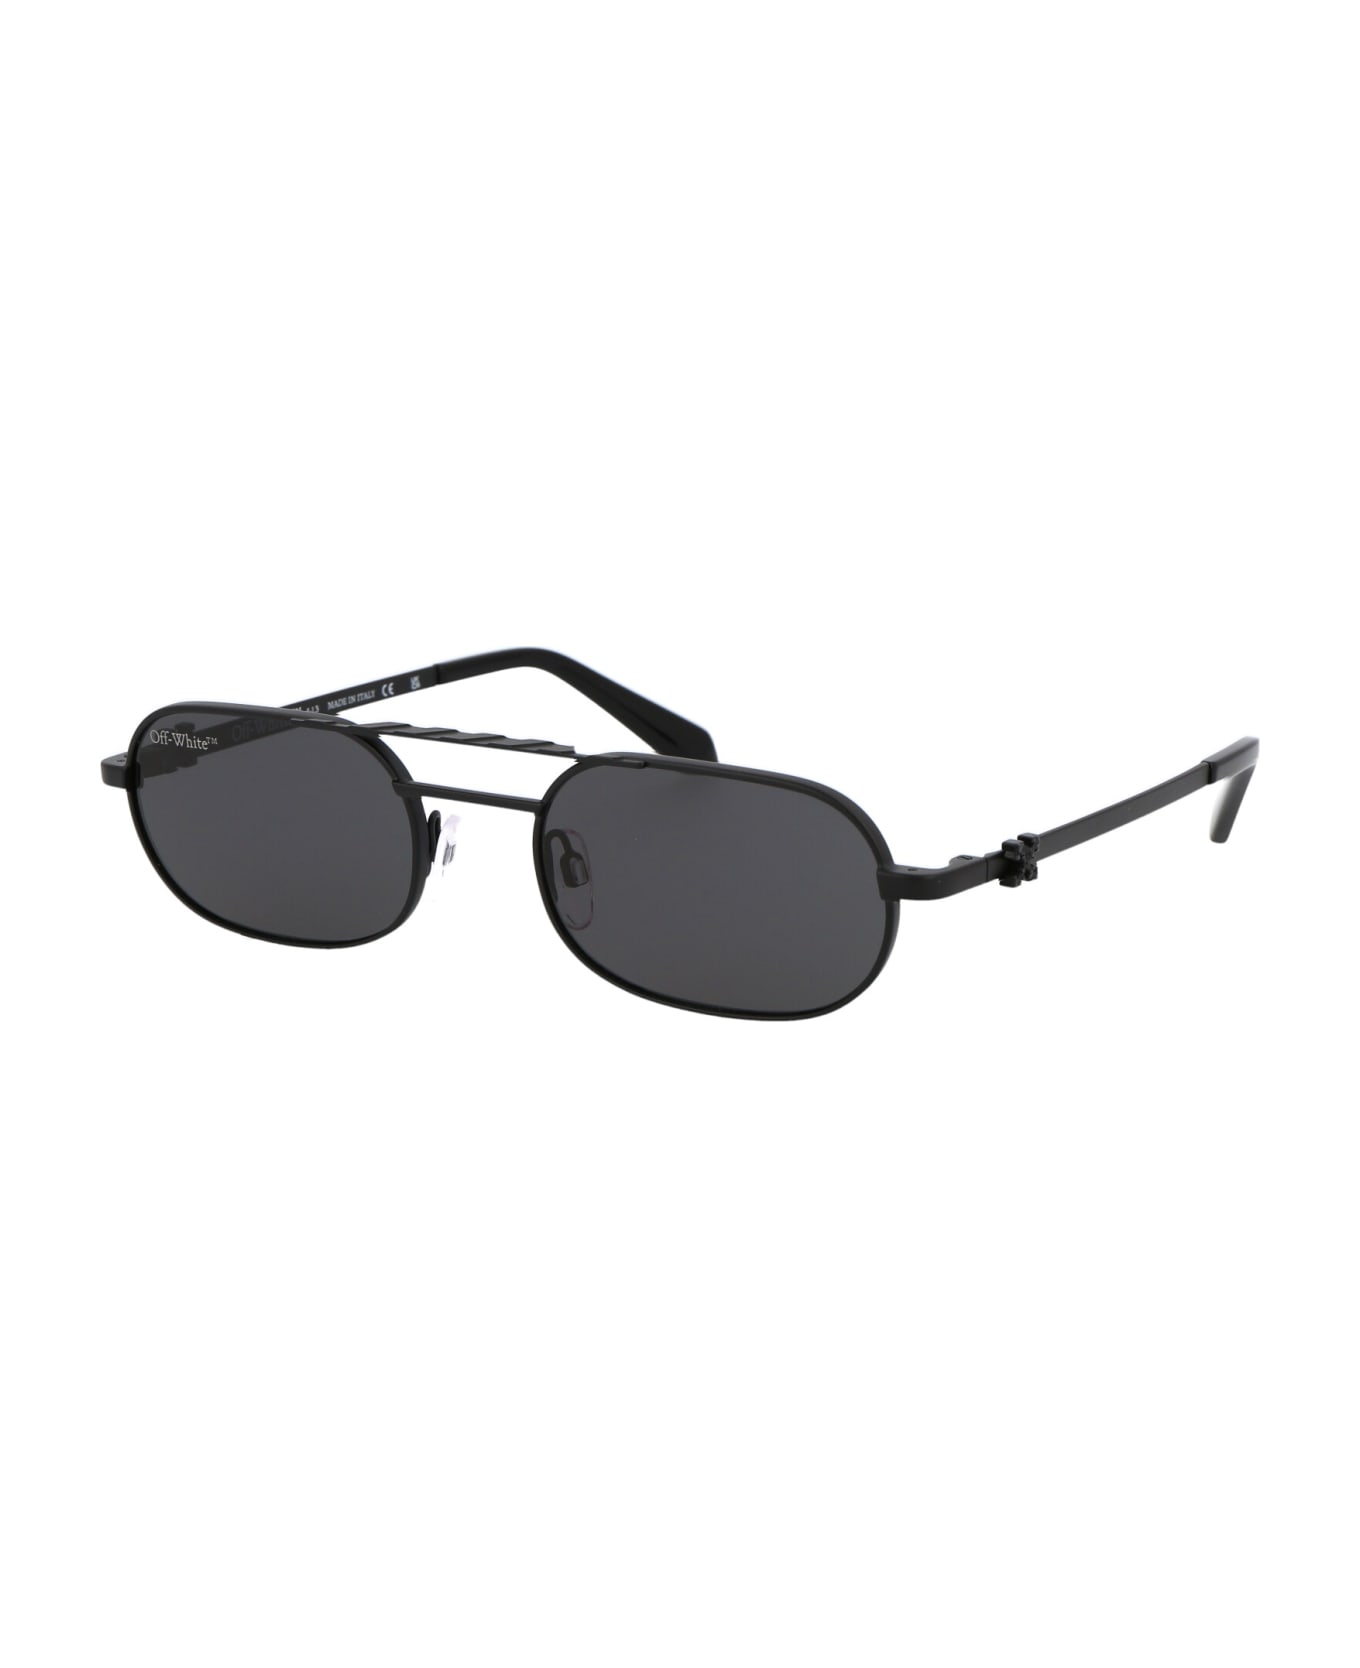 Off-White Baltimore Sunglasses - 1007 BLACK DARK GREY サングラス